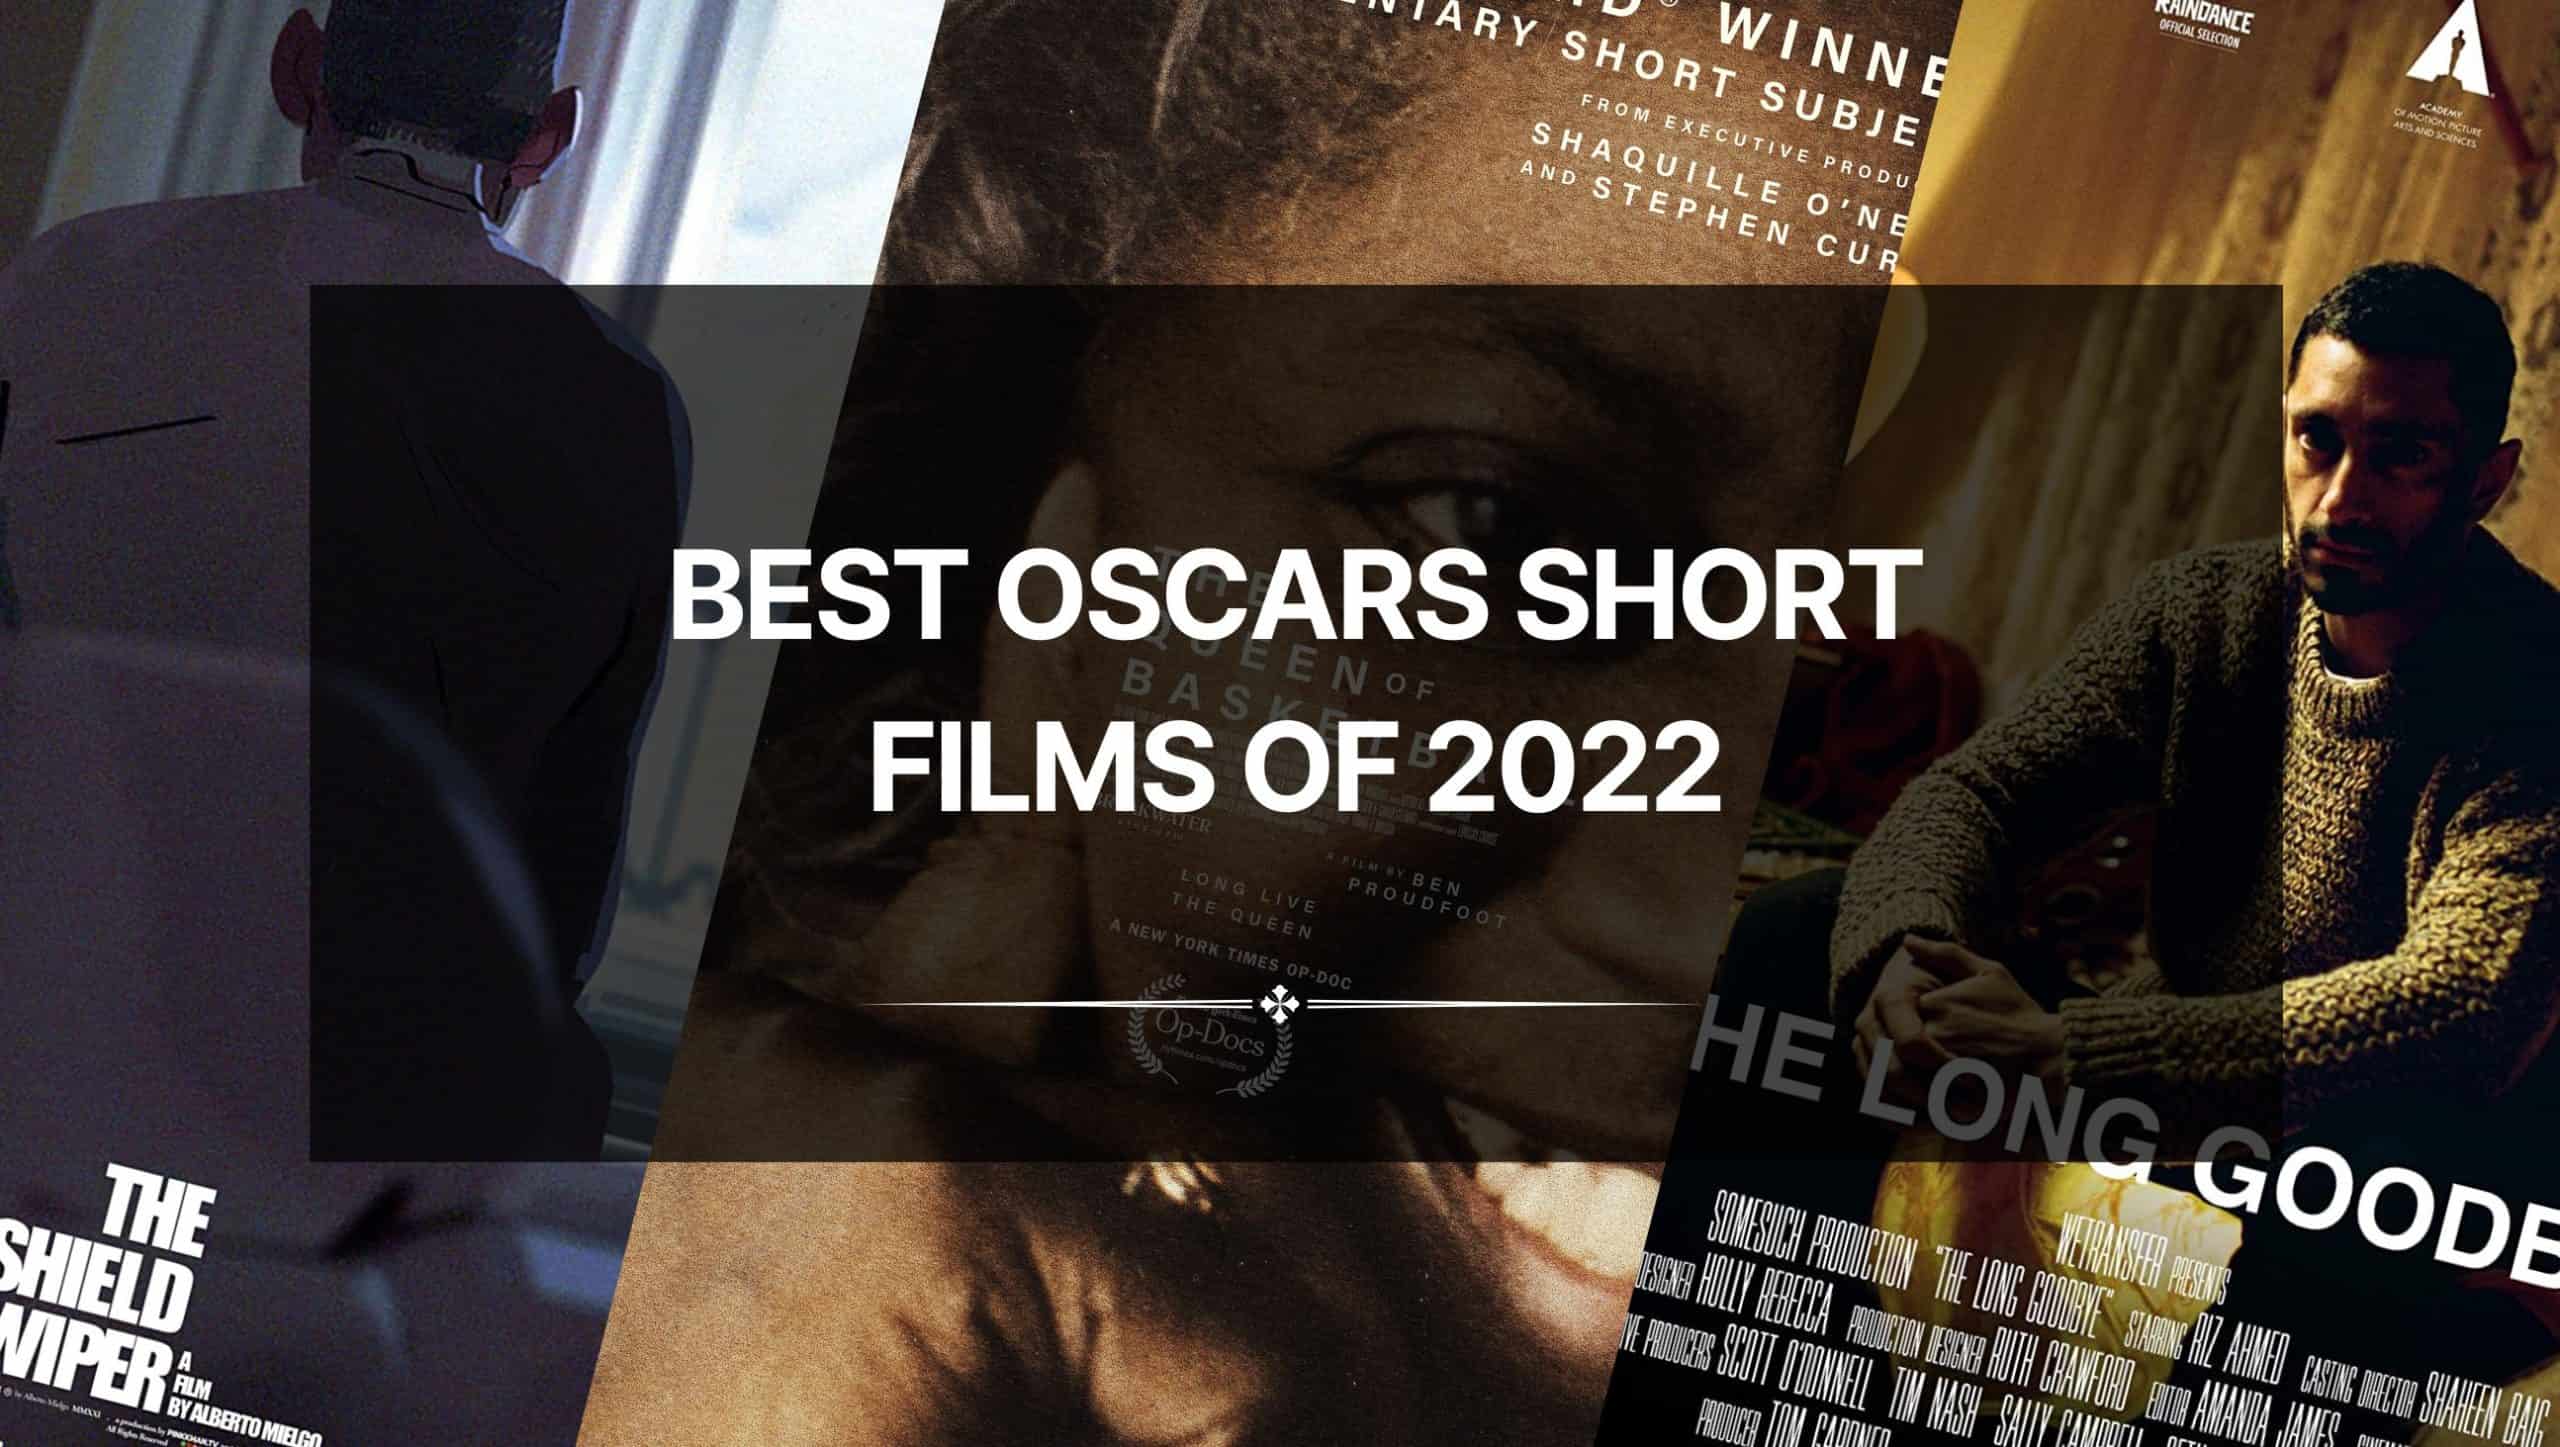 Best Oscars Short Films of 2022